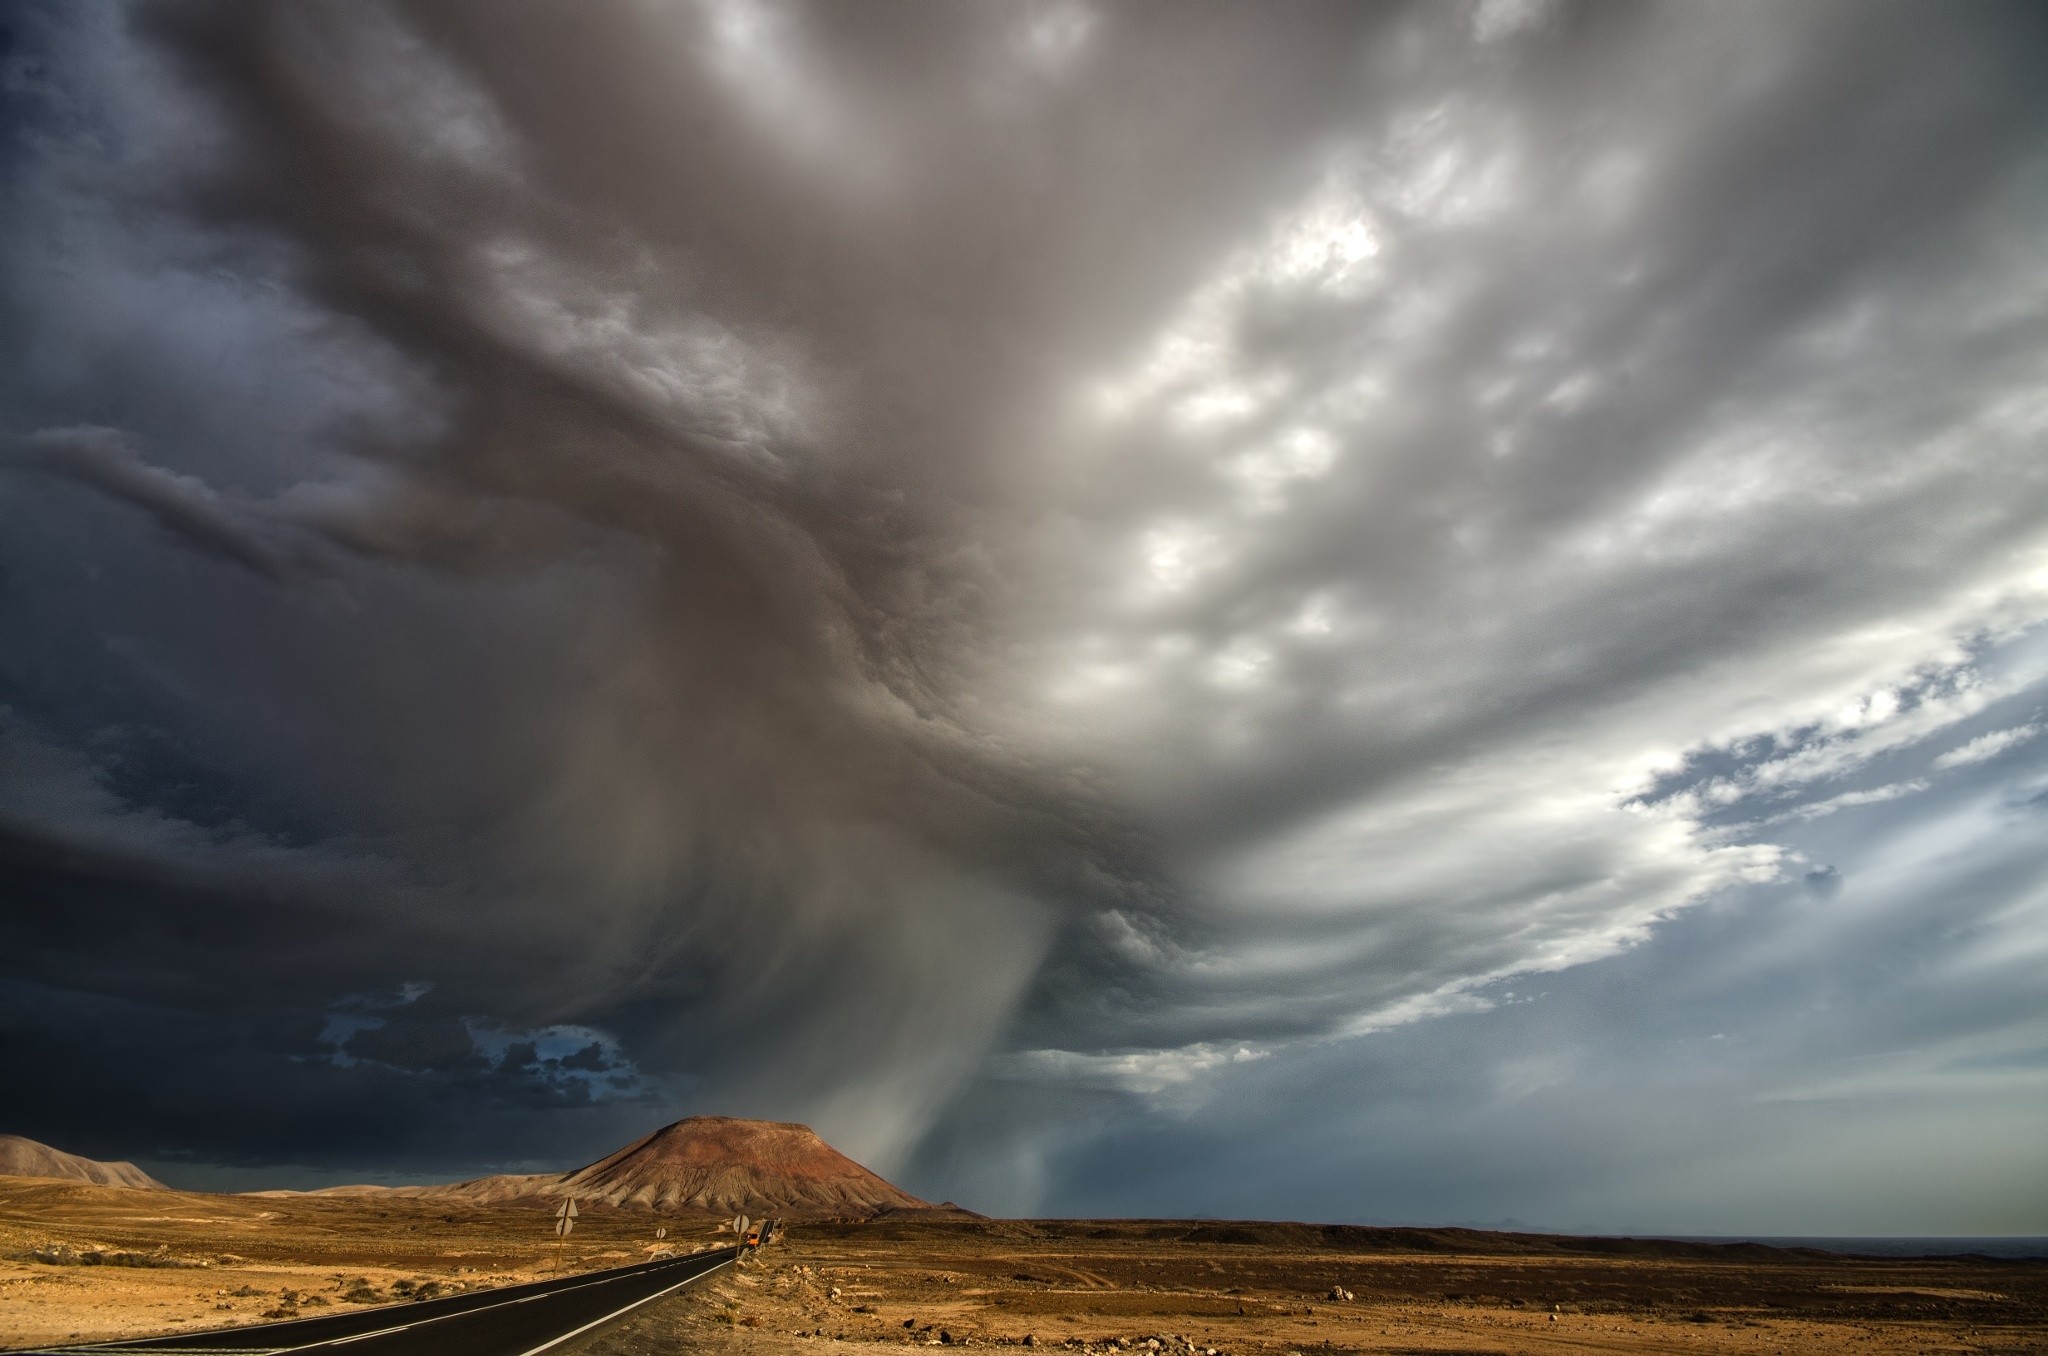 General 2048x1356 landscape nature clouds sky desert road storm